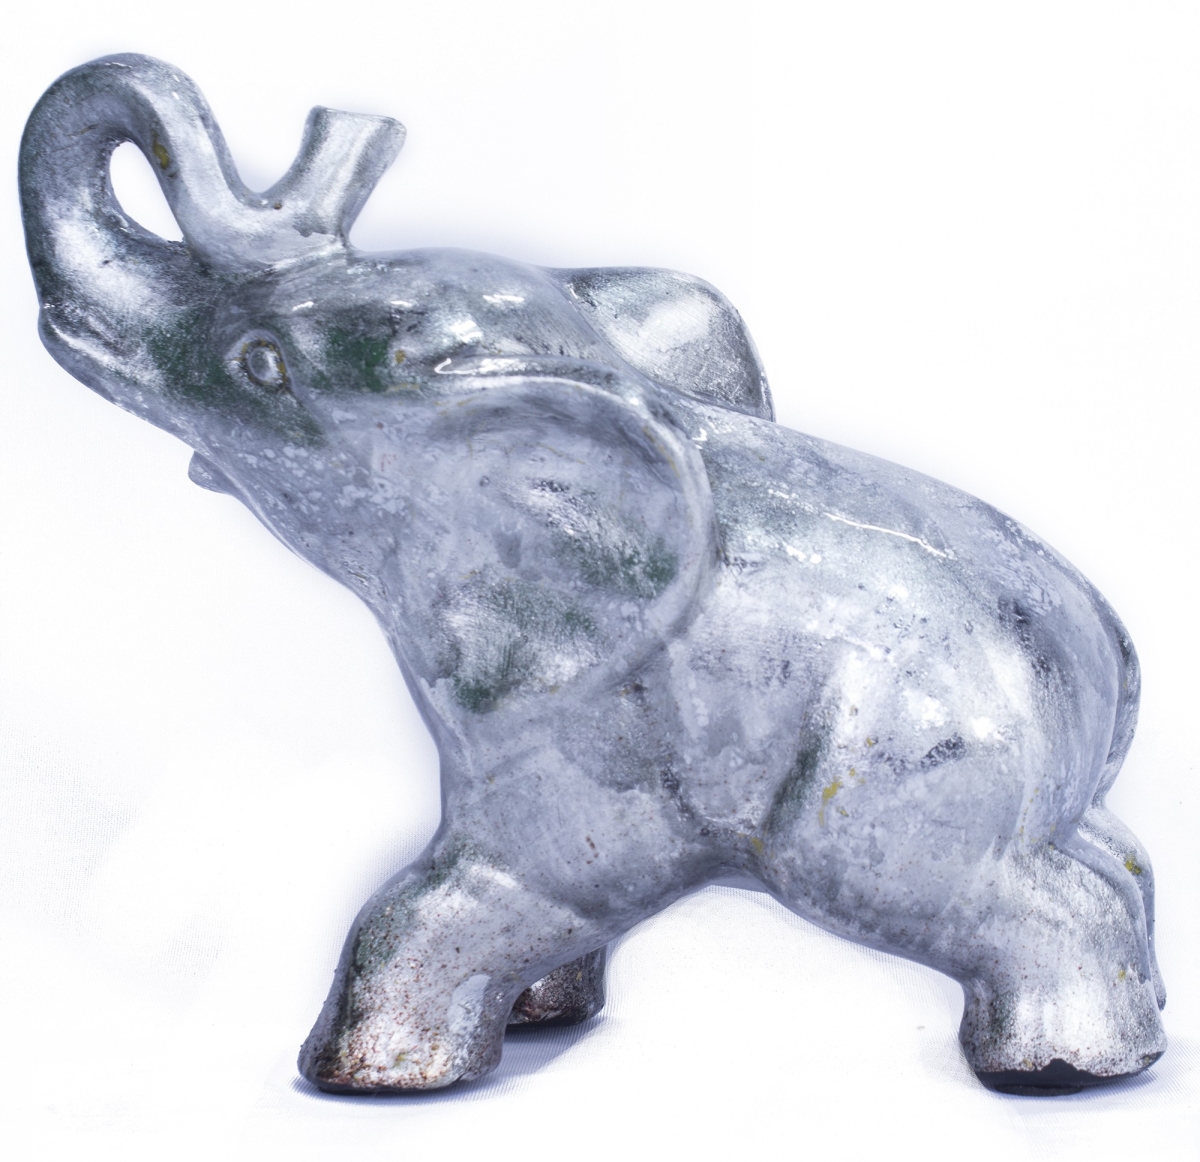 W071352-b85 8 In. India Decorative Ceramic Elephant, Silver